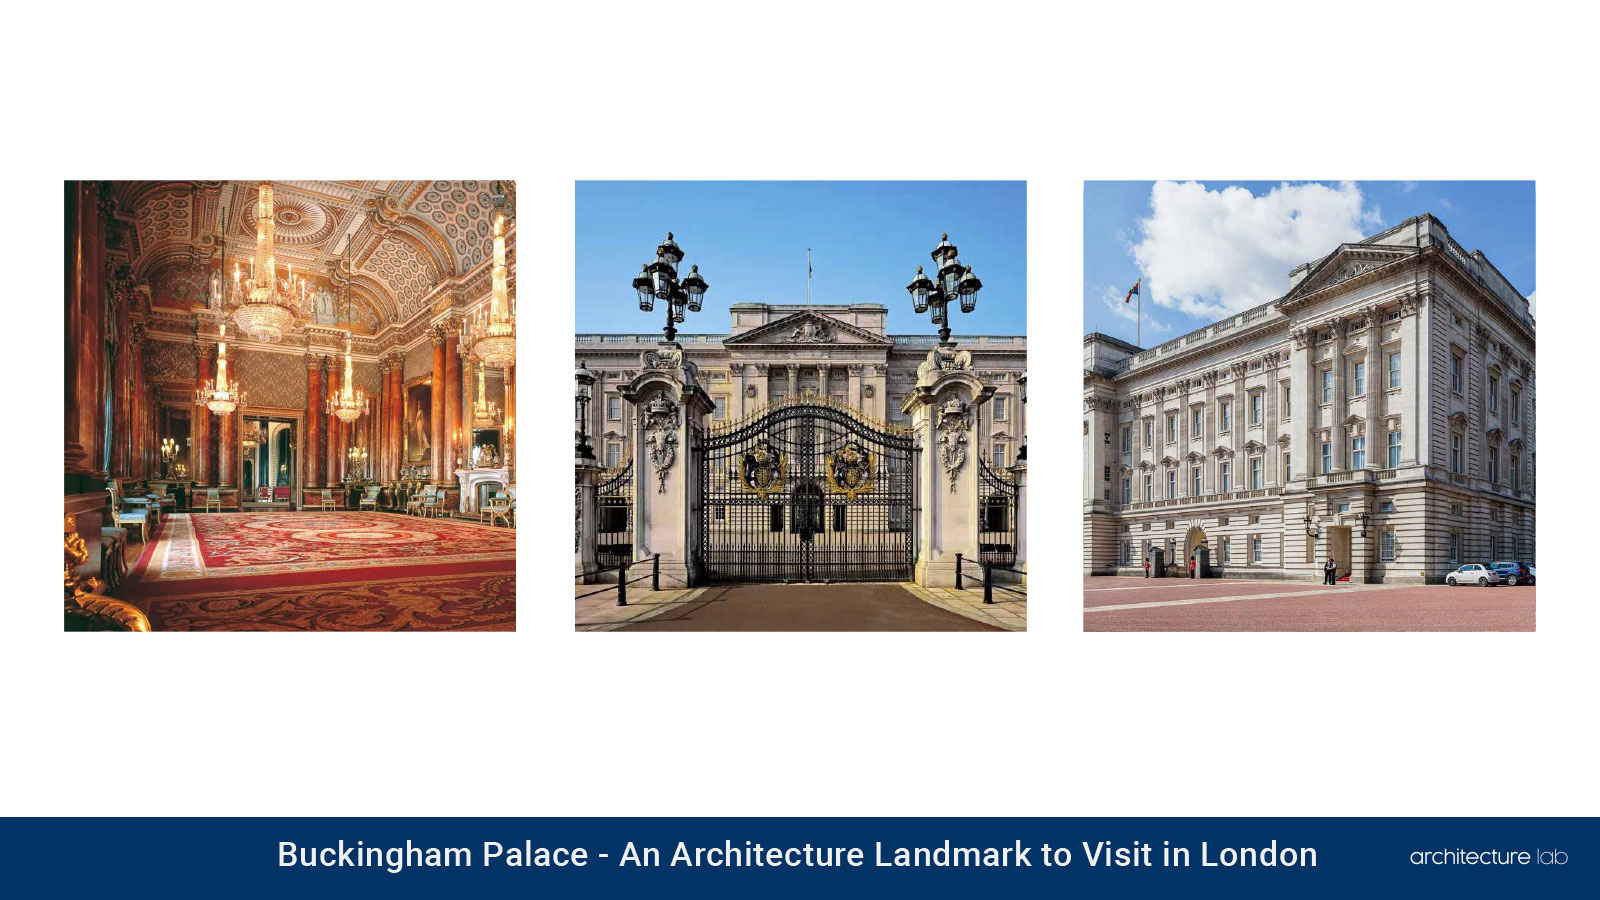 Buckingham palace: an architecture landmark to visit in london